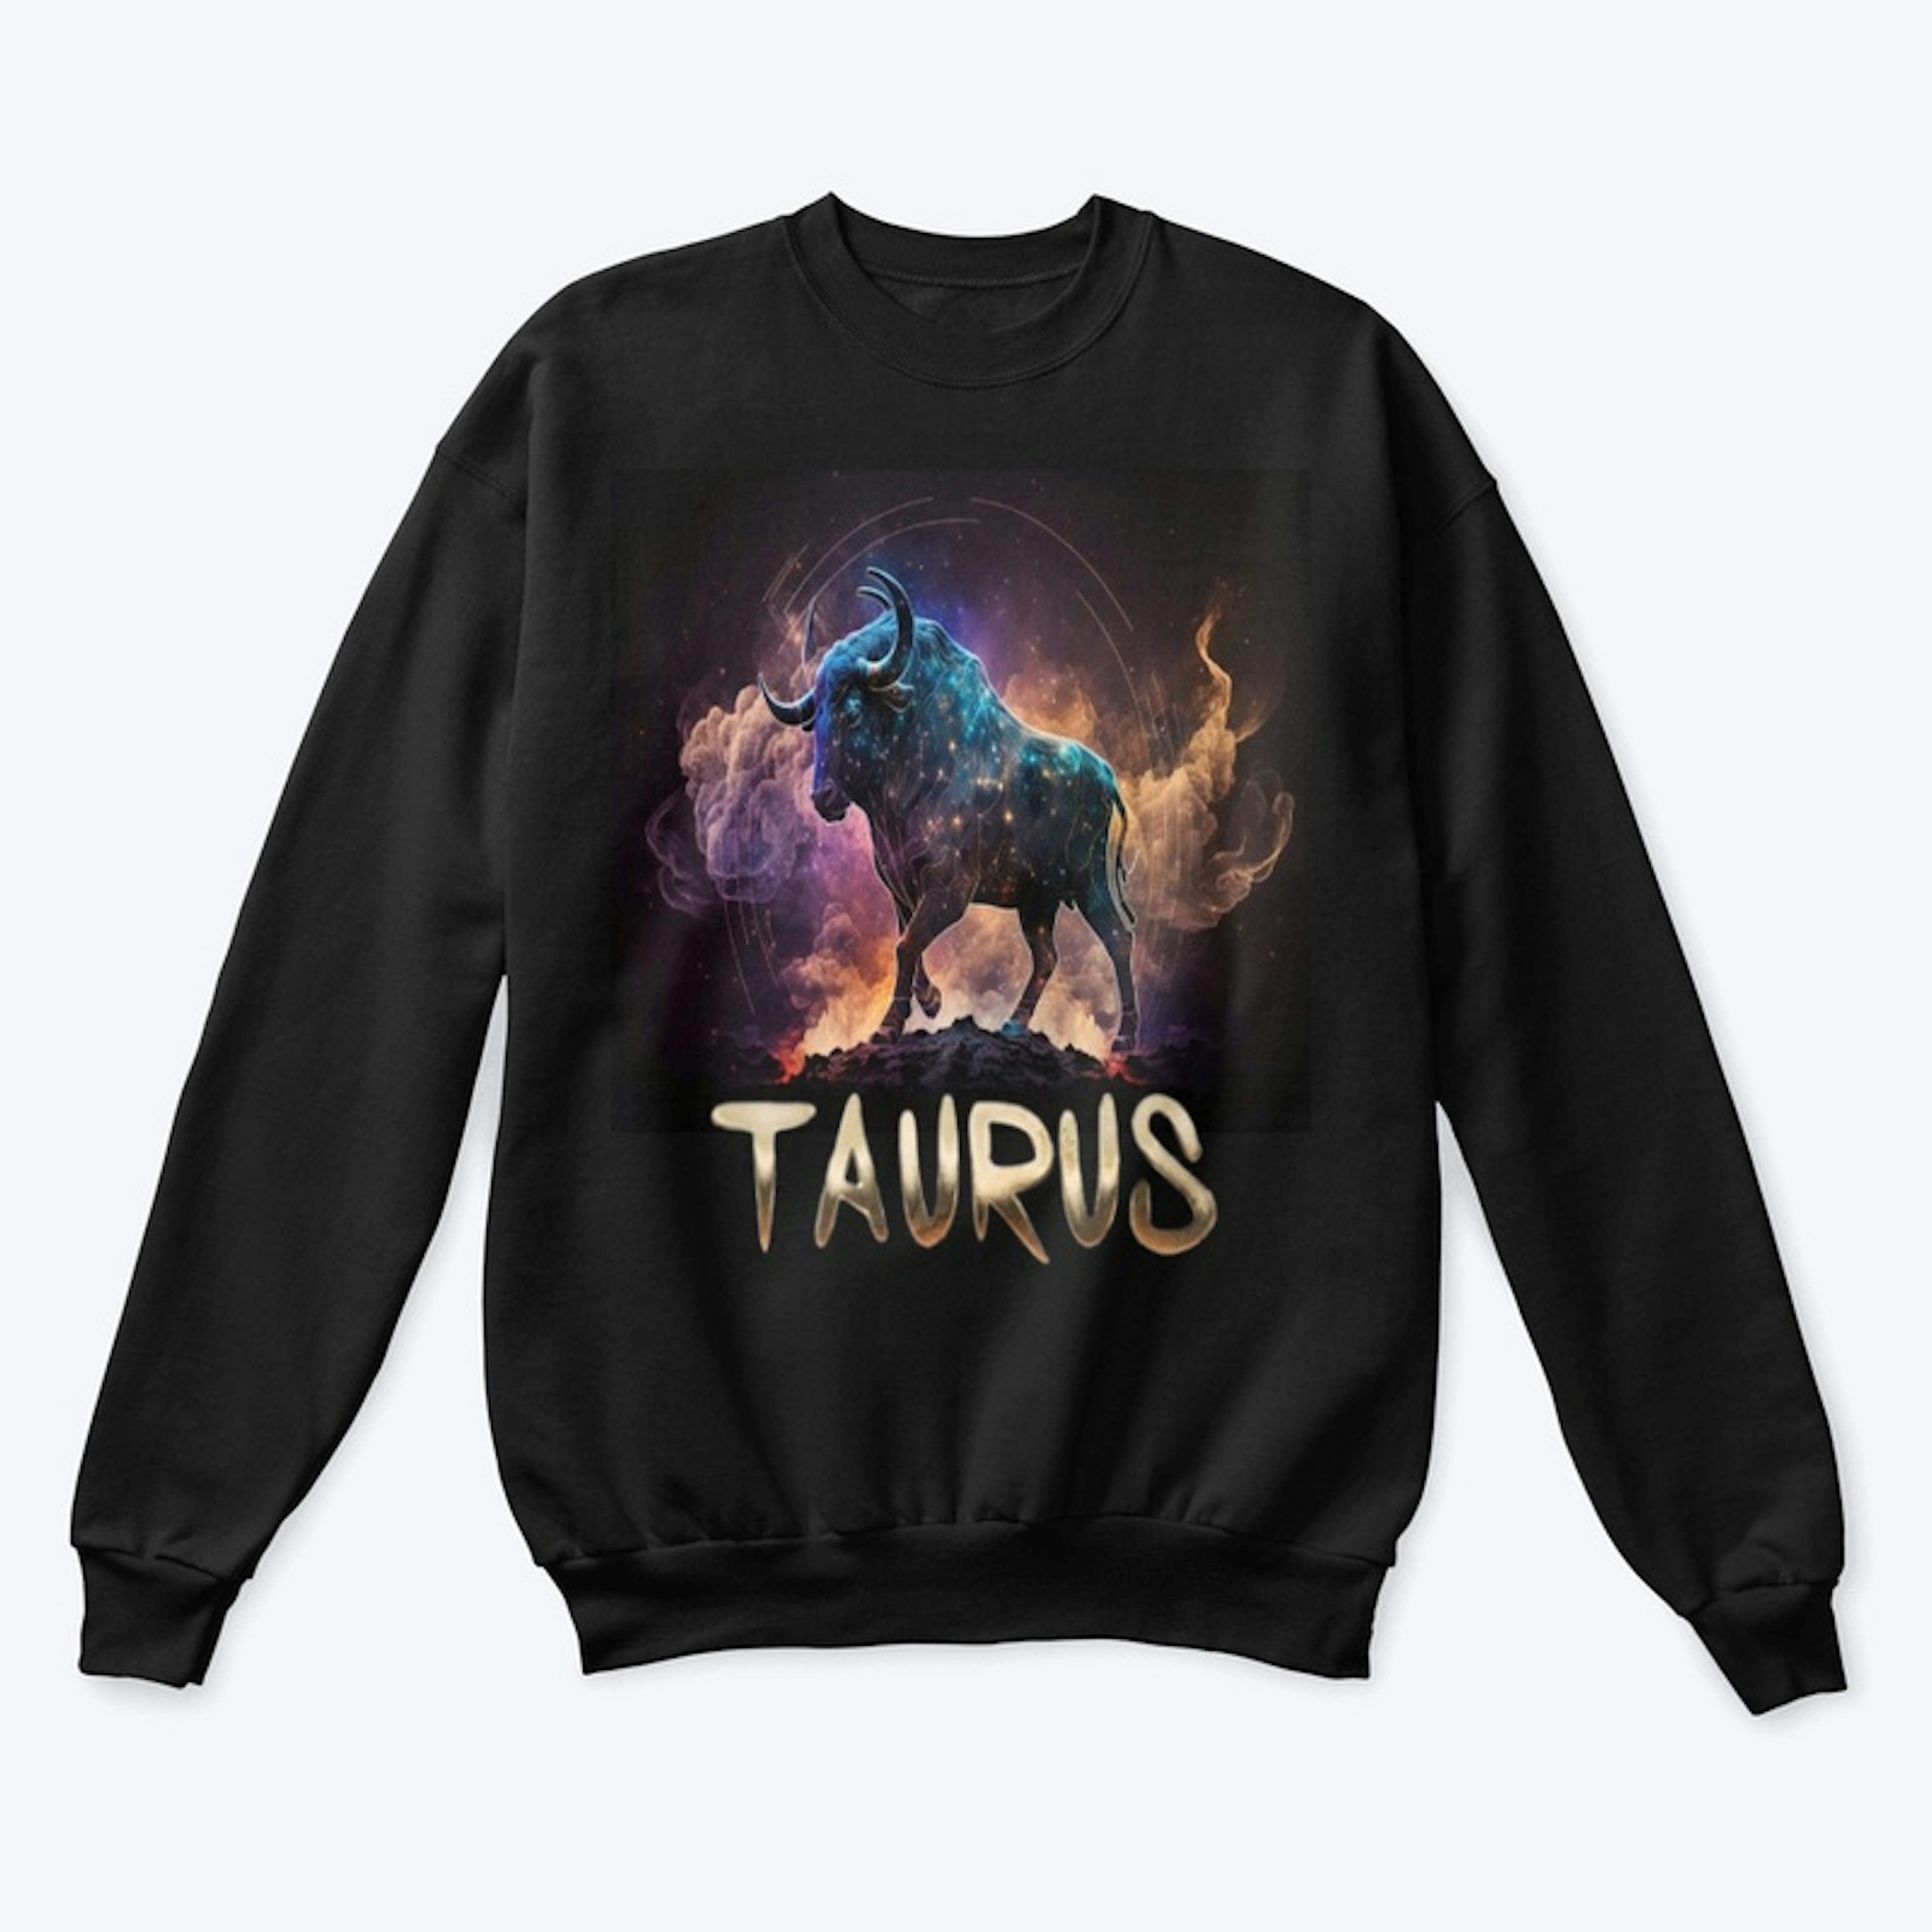 Taurus Horoscope Apparel and Accessories